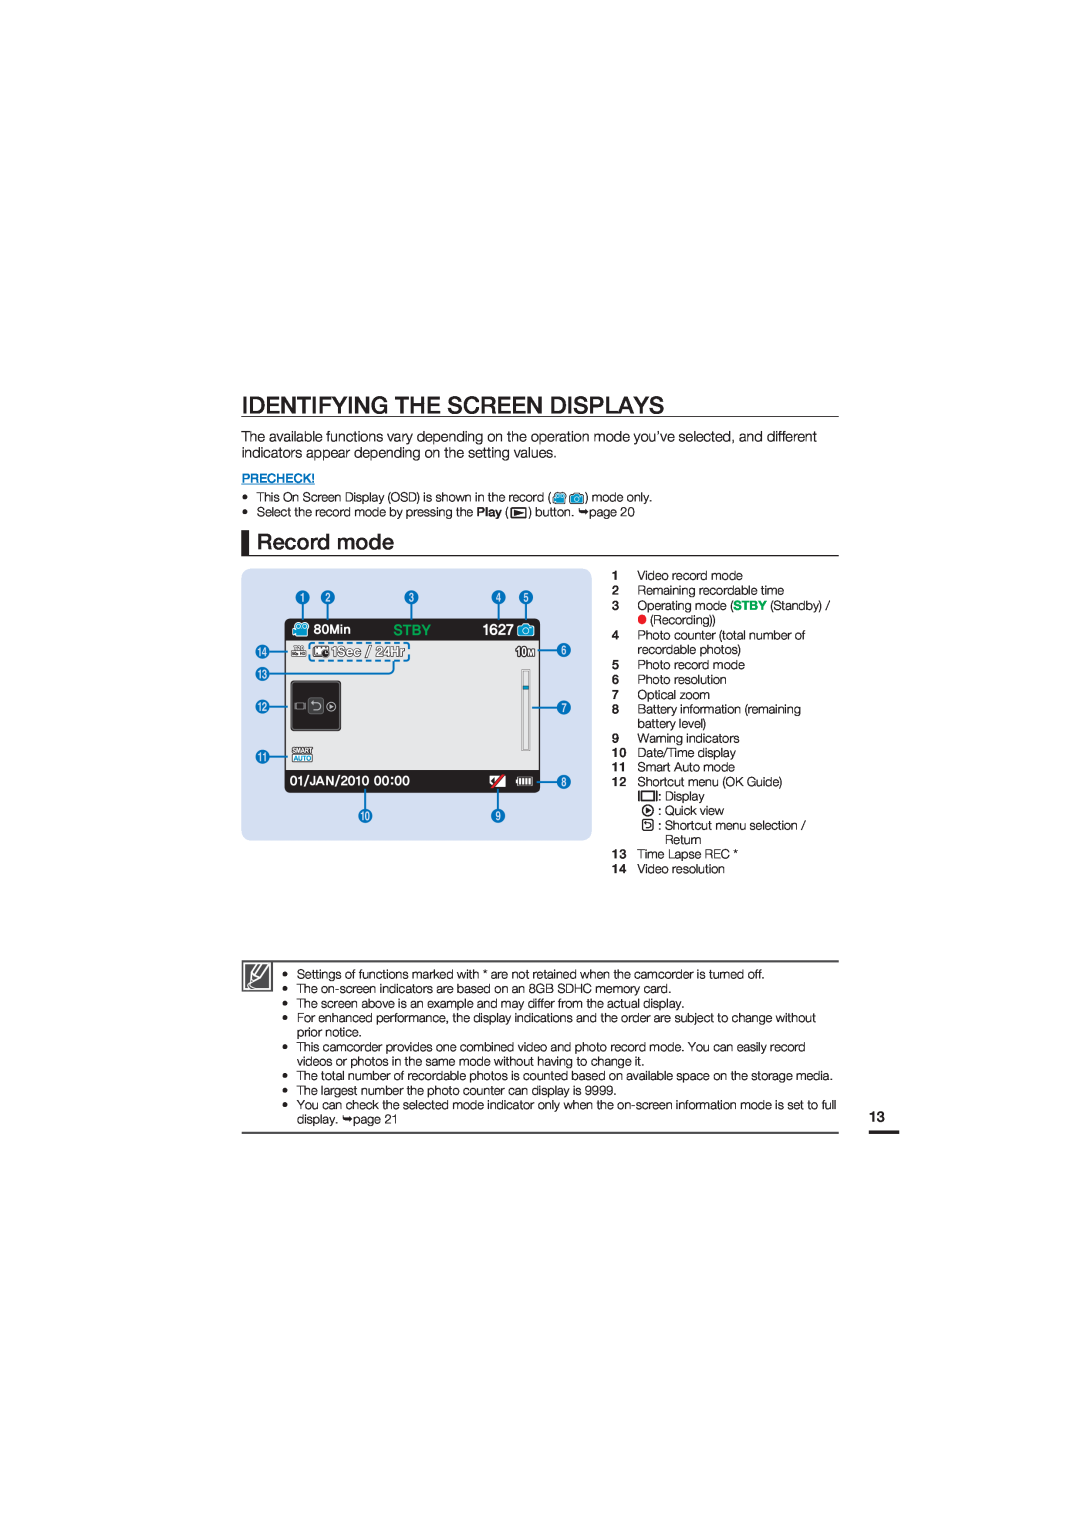 Samsung HMX-U20RP/XTL, HMX-U20RP/EDC manual Identifying The Screen Displays, Record mode, , Precheck, .Jo, 4FDS 